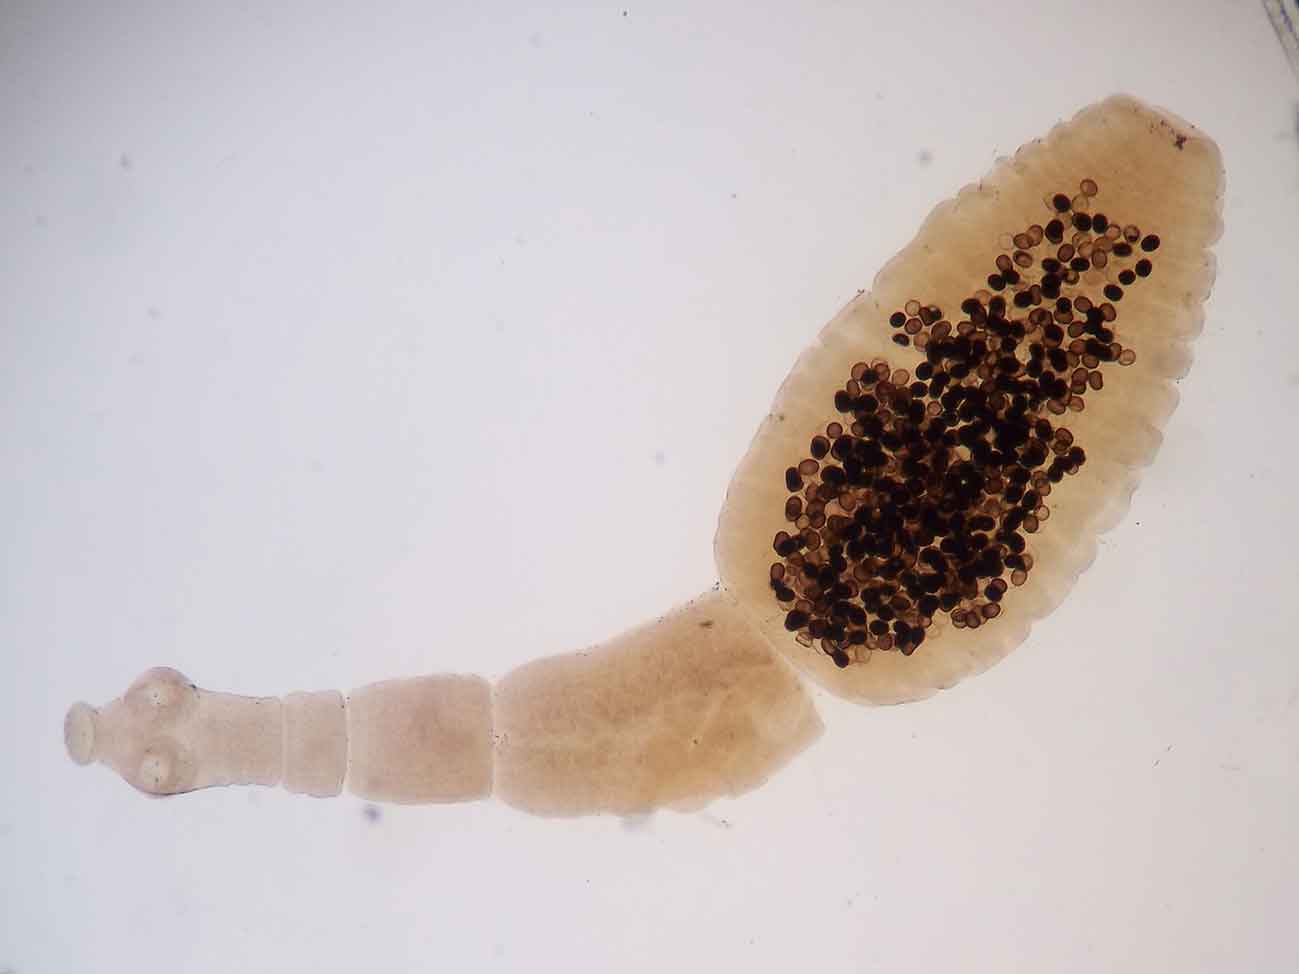 Echinococcus granulosus. Image: Leoncastro / Wikimedia Commons